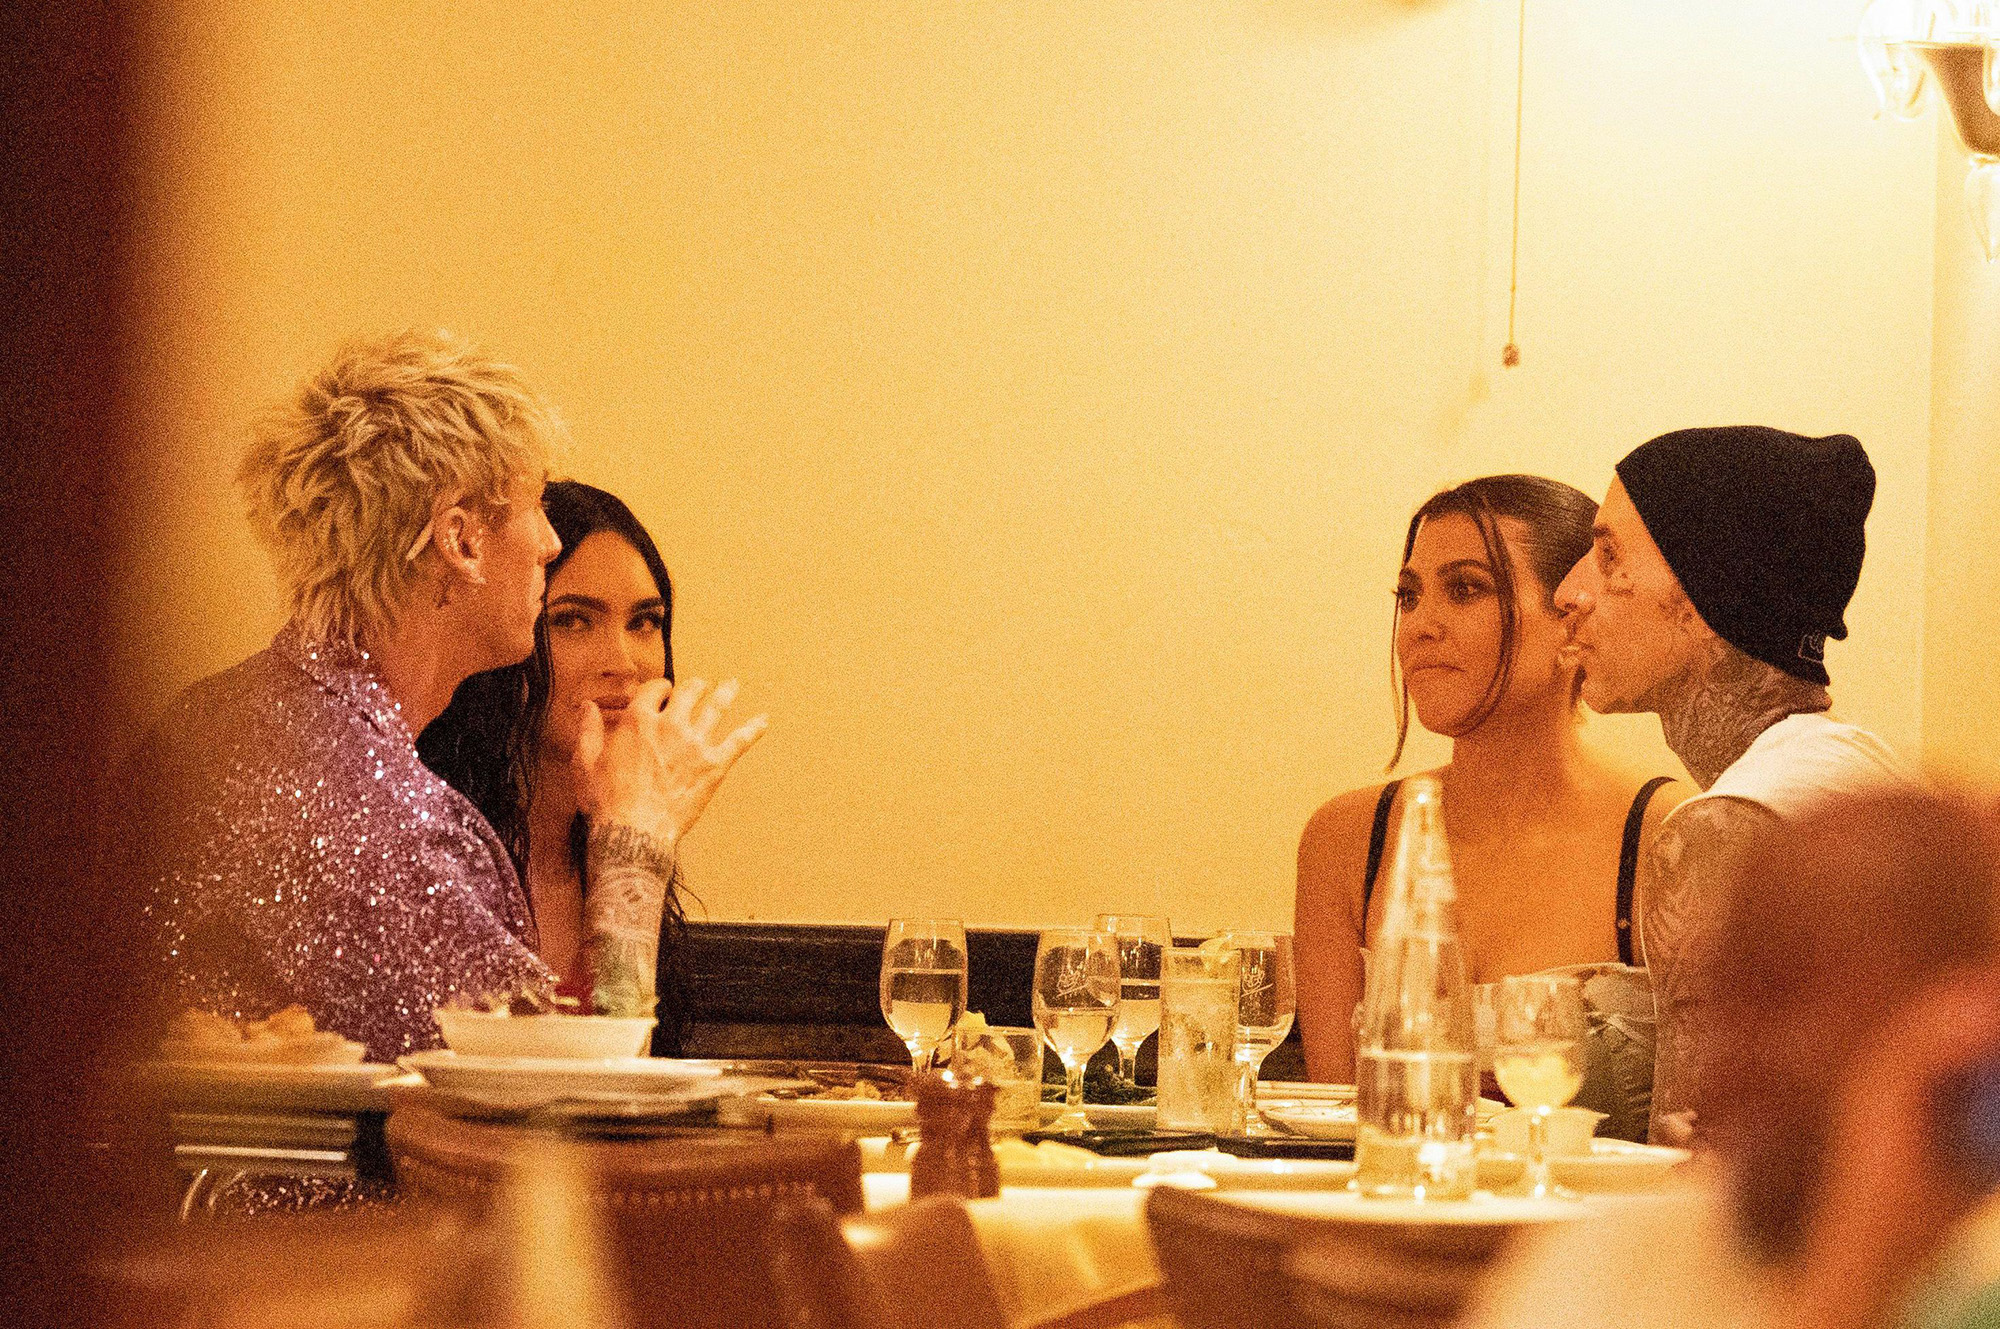 Machine Gun Kelly, Megan Fox, Kourtney Kardashian and Travis Barker dining together.